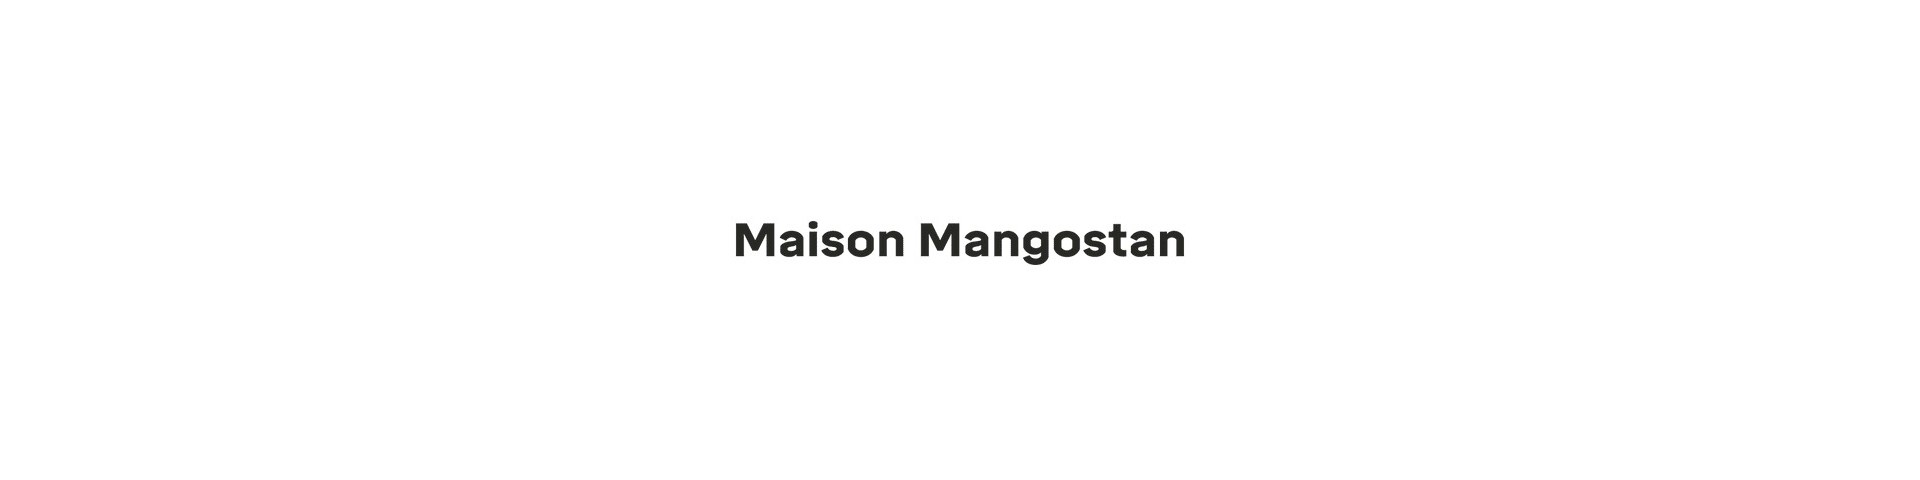 Maison-Mangostan